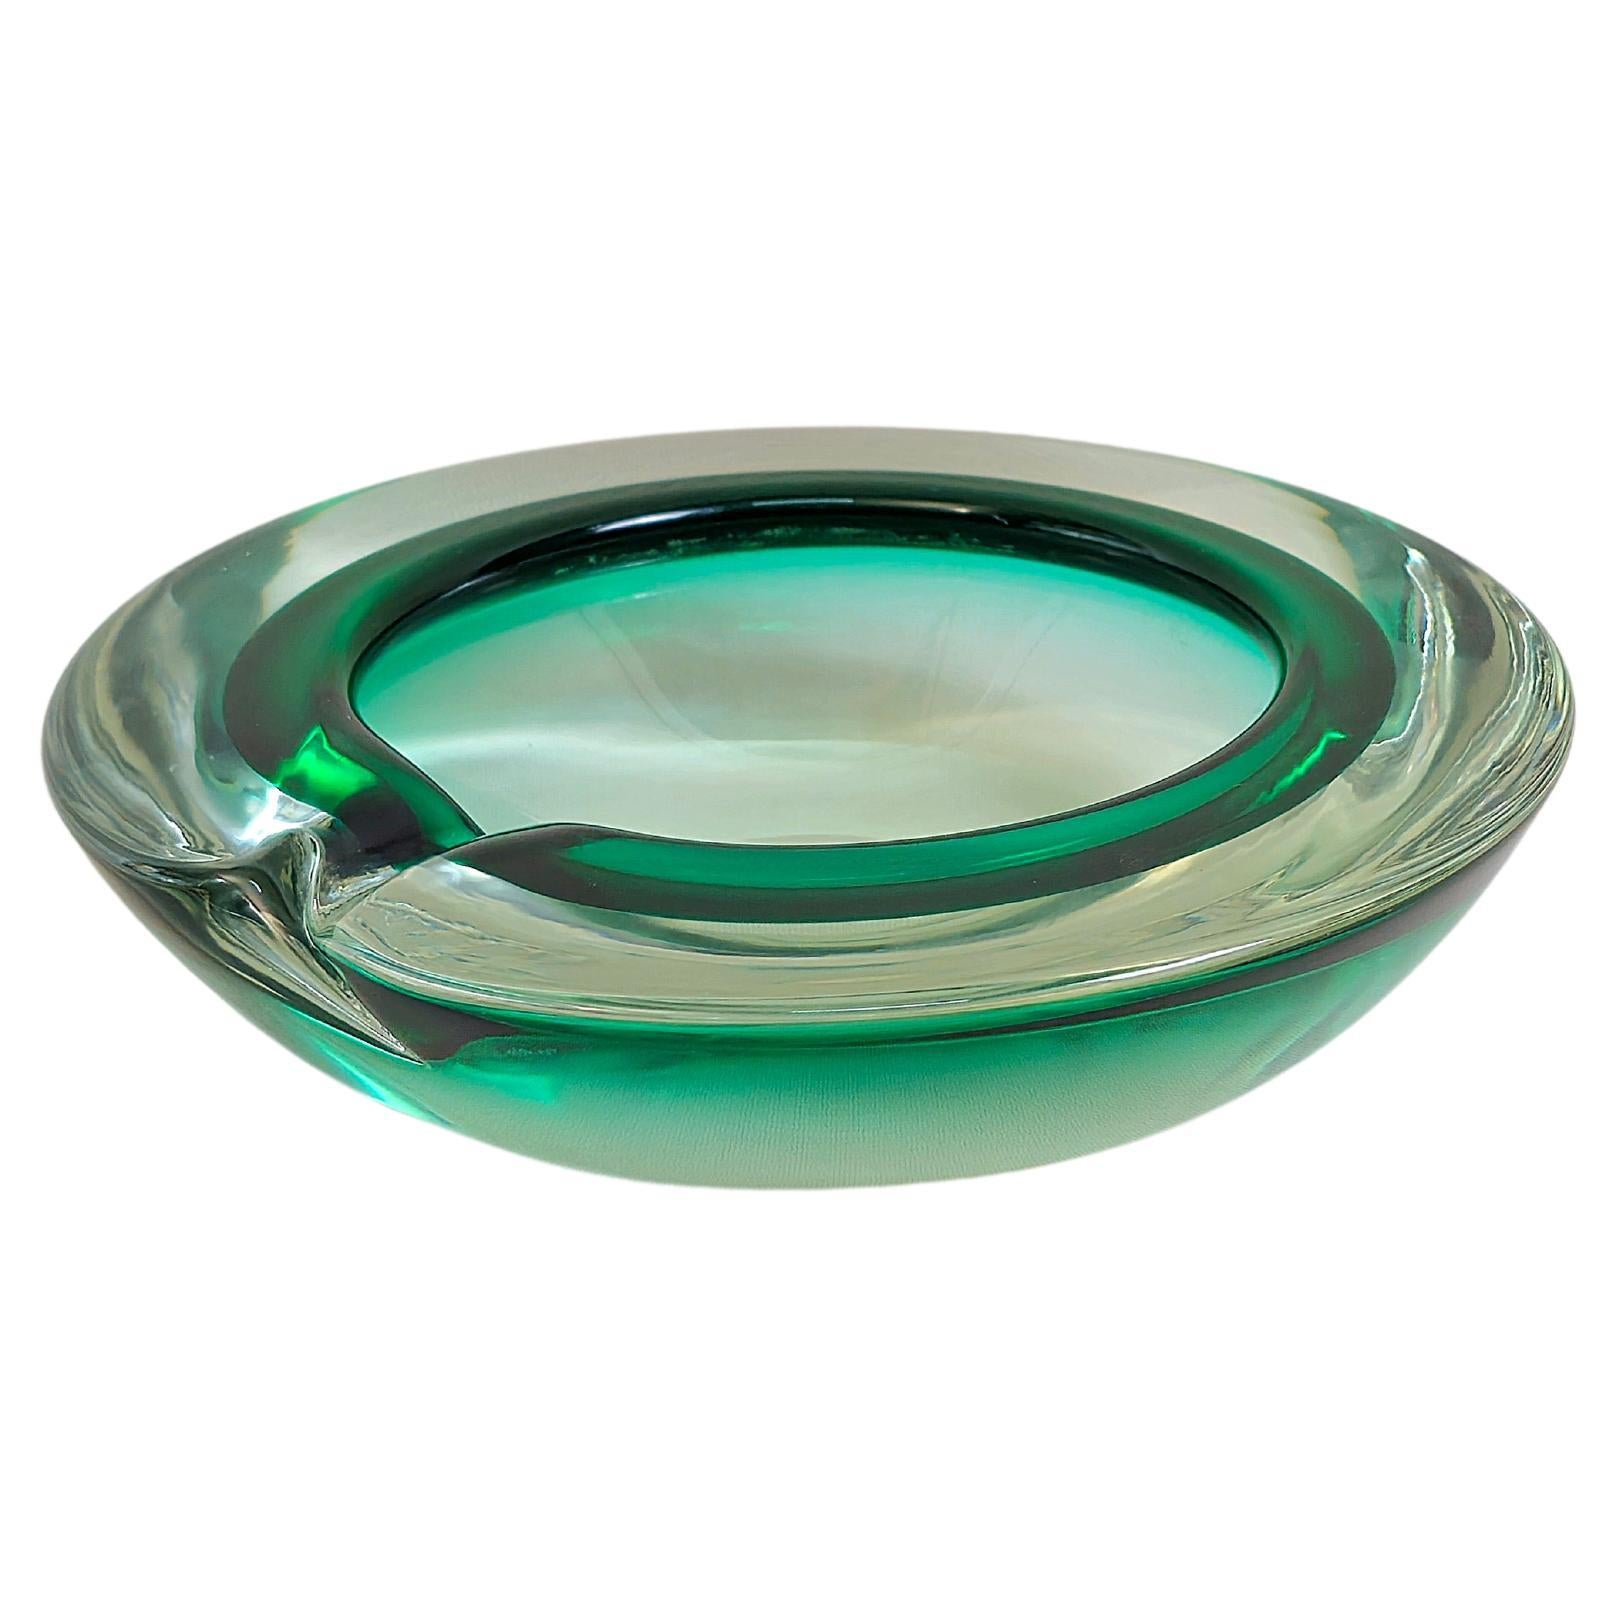 Ashtray Murano Glass Green Transparent  Midcentury Modern Italian Design 1960s